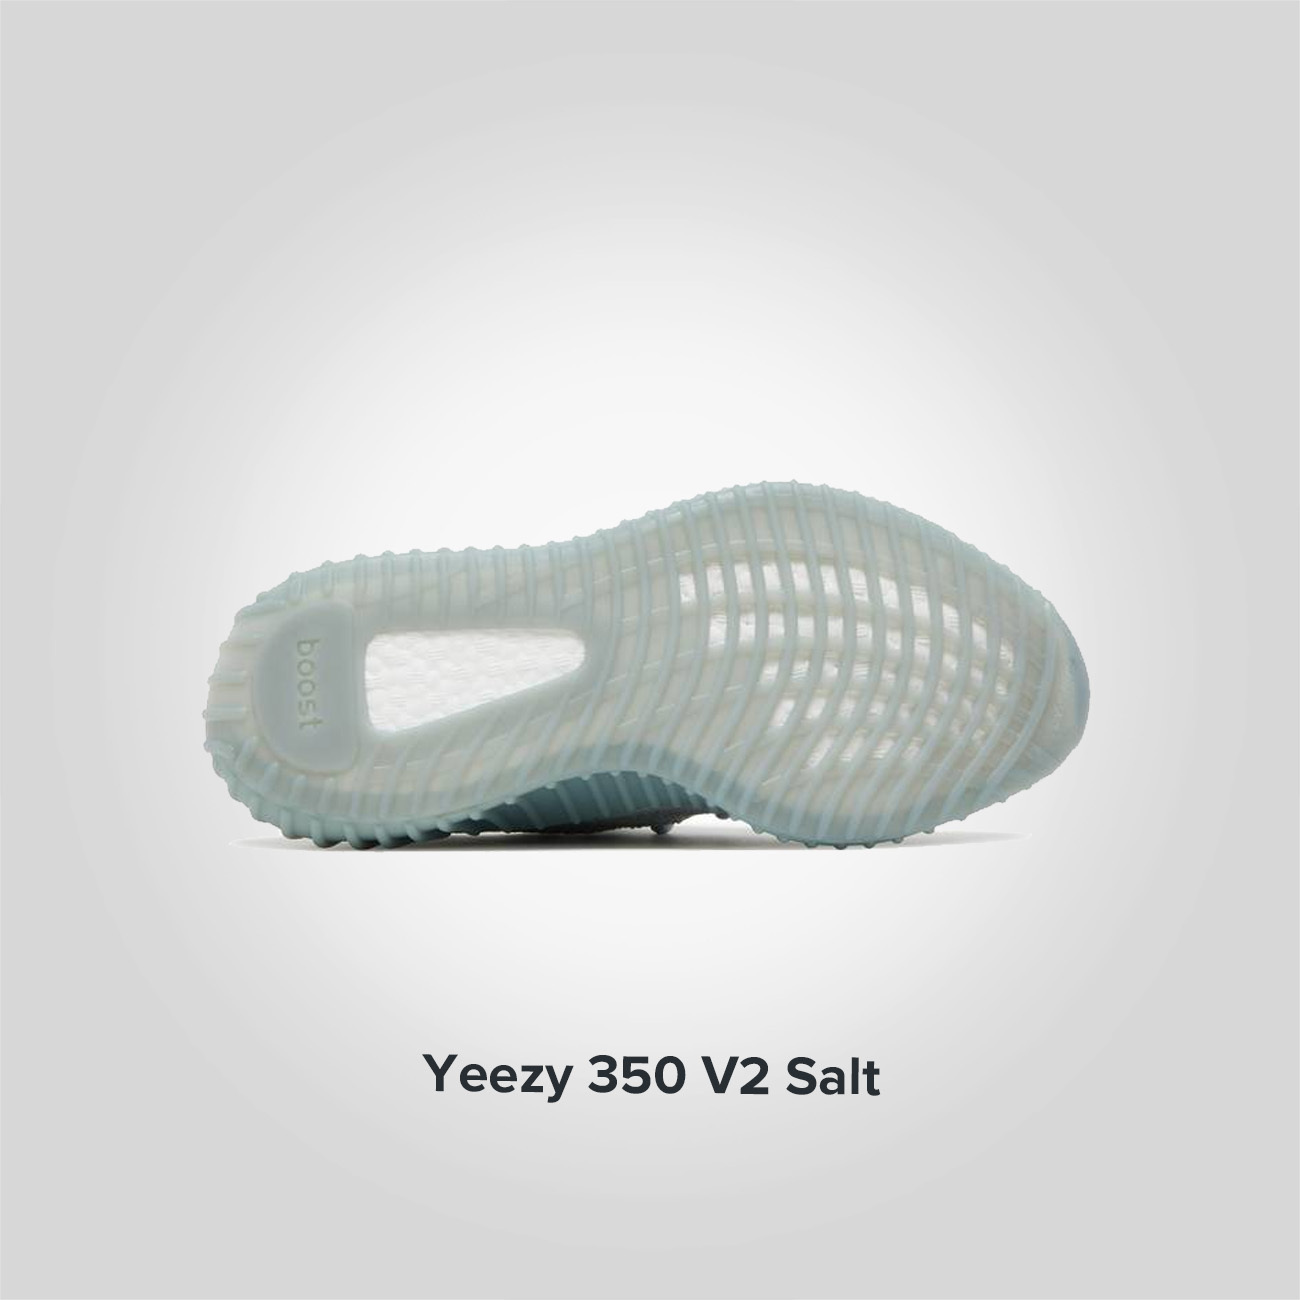 Yeezy 350 V2 Salt